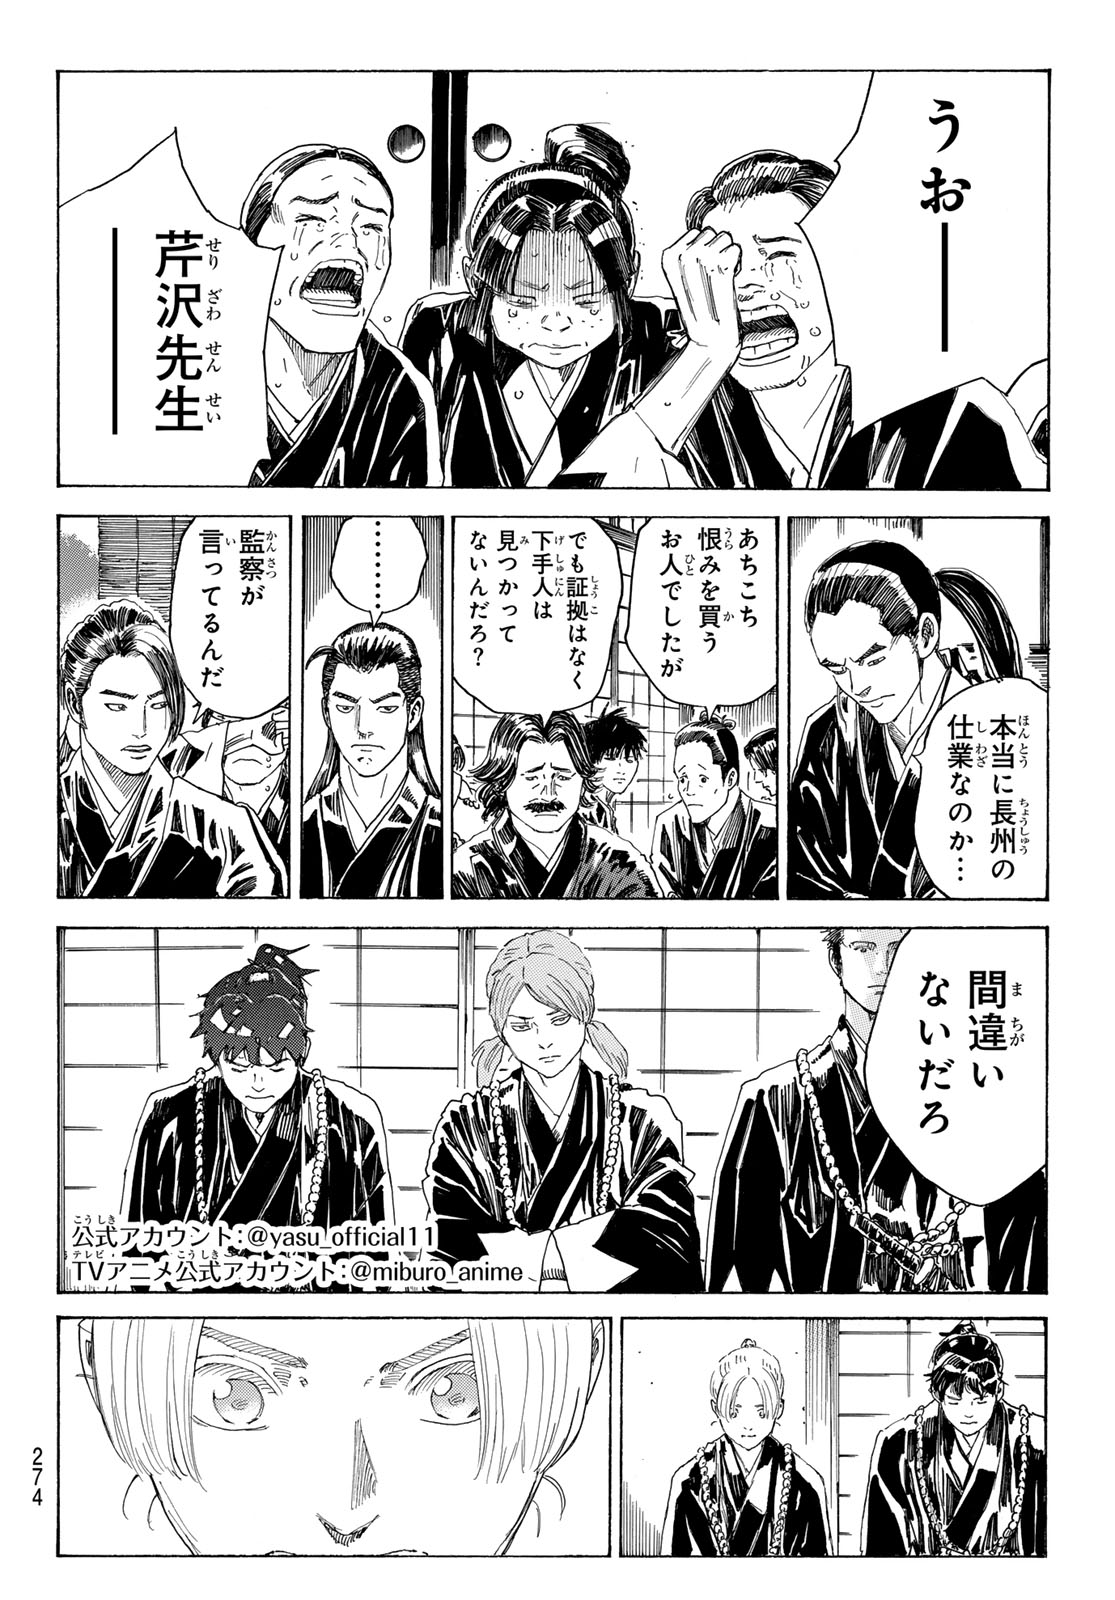 Ao no Miburo - Chapter 116 - Page 2